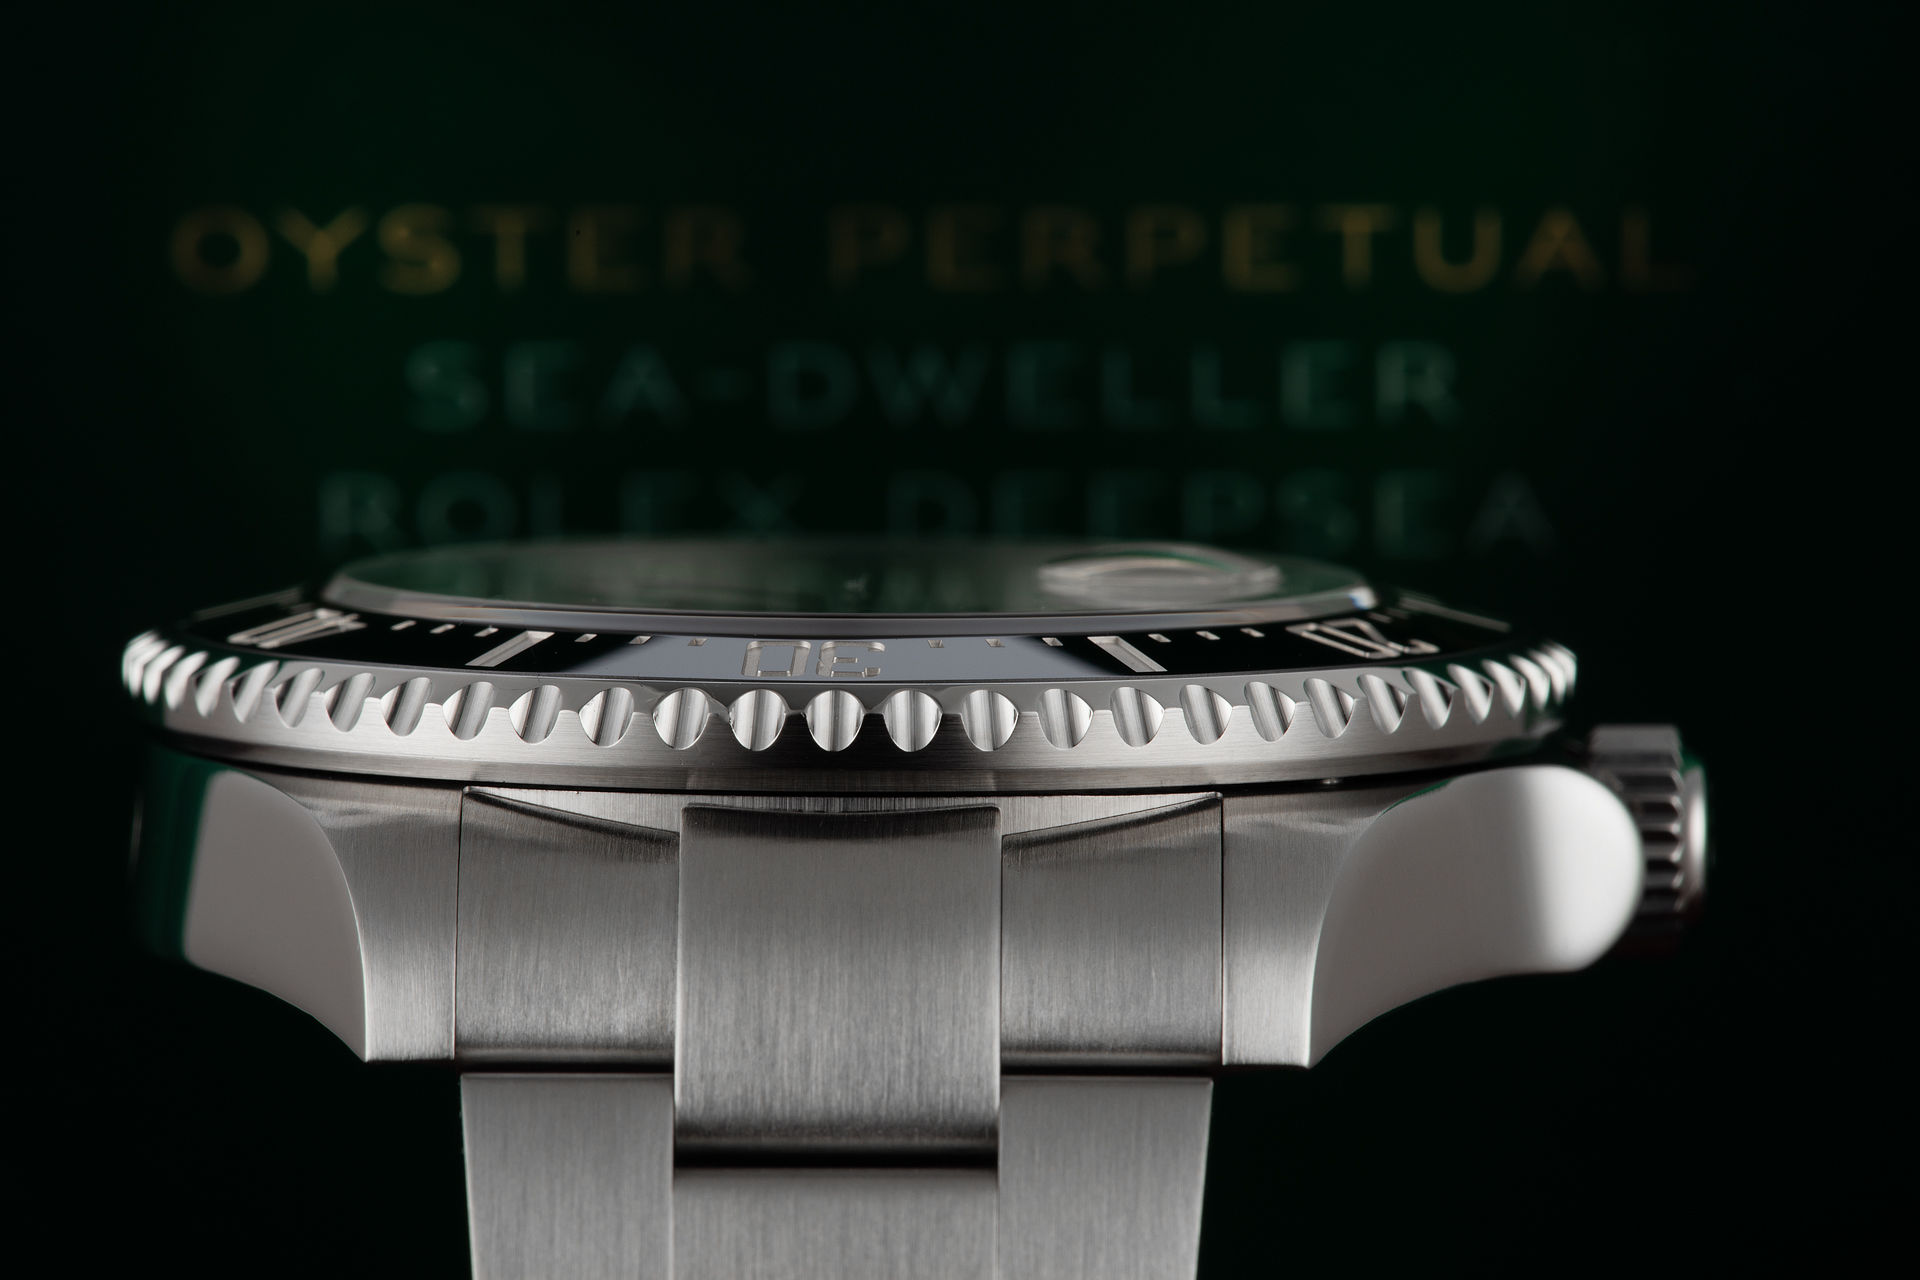 ref 126600 | Anniversary 'Full Set' | Rolex Sea-Dweller